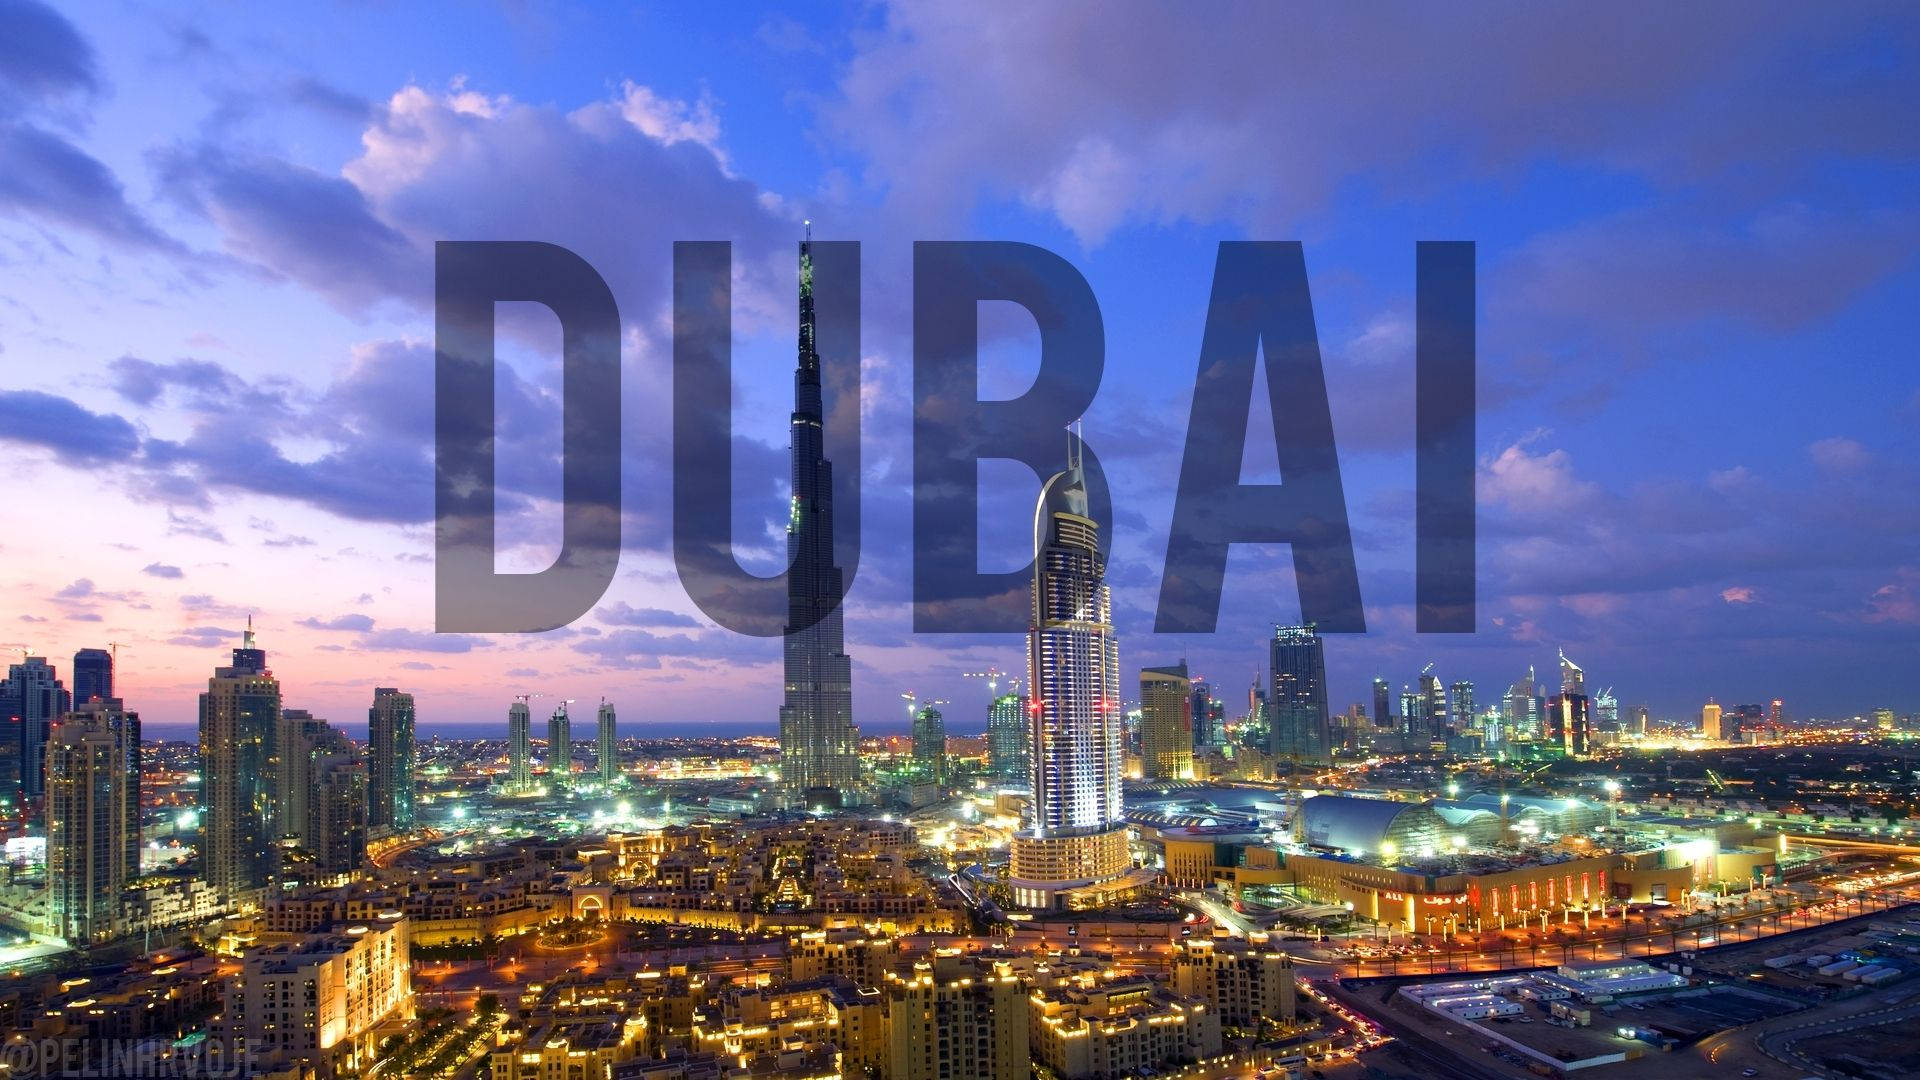 Free Dubai Wallpaper Downloads, [200+] Dubai Wallpapers for FREE |  